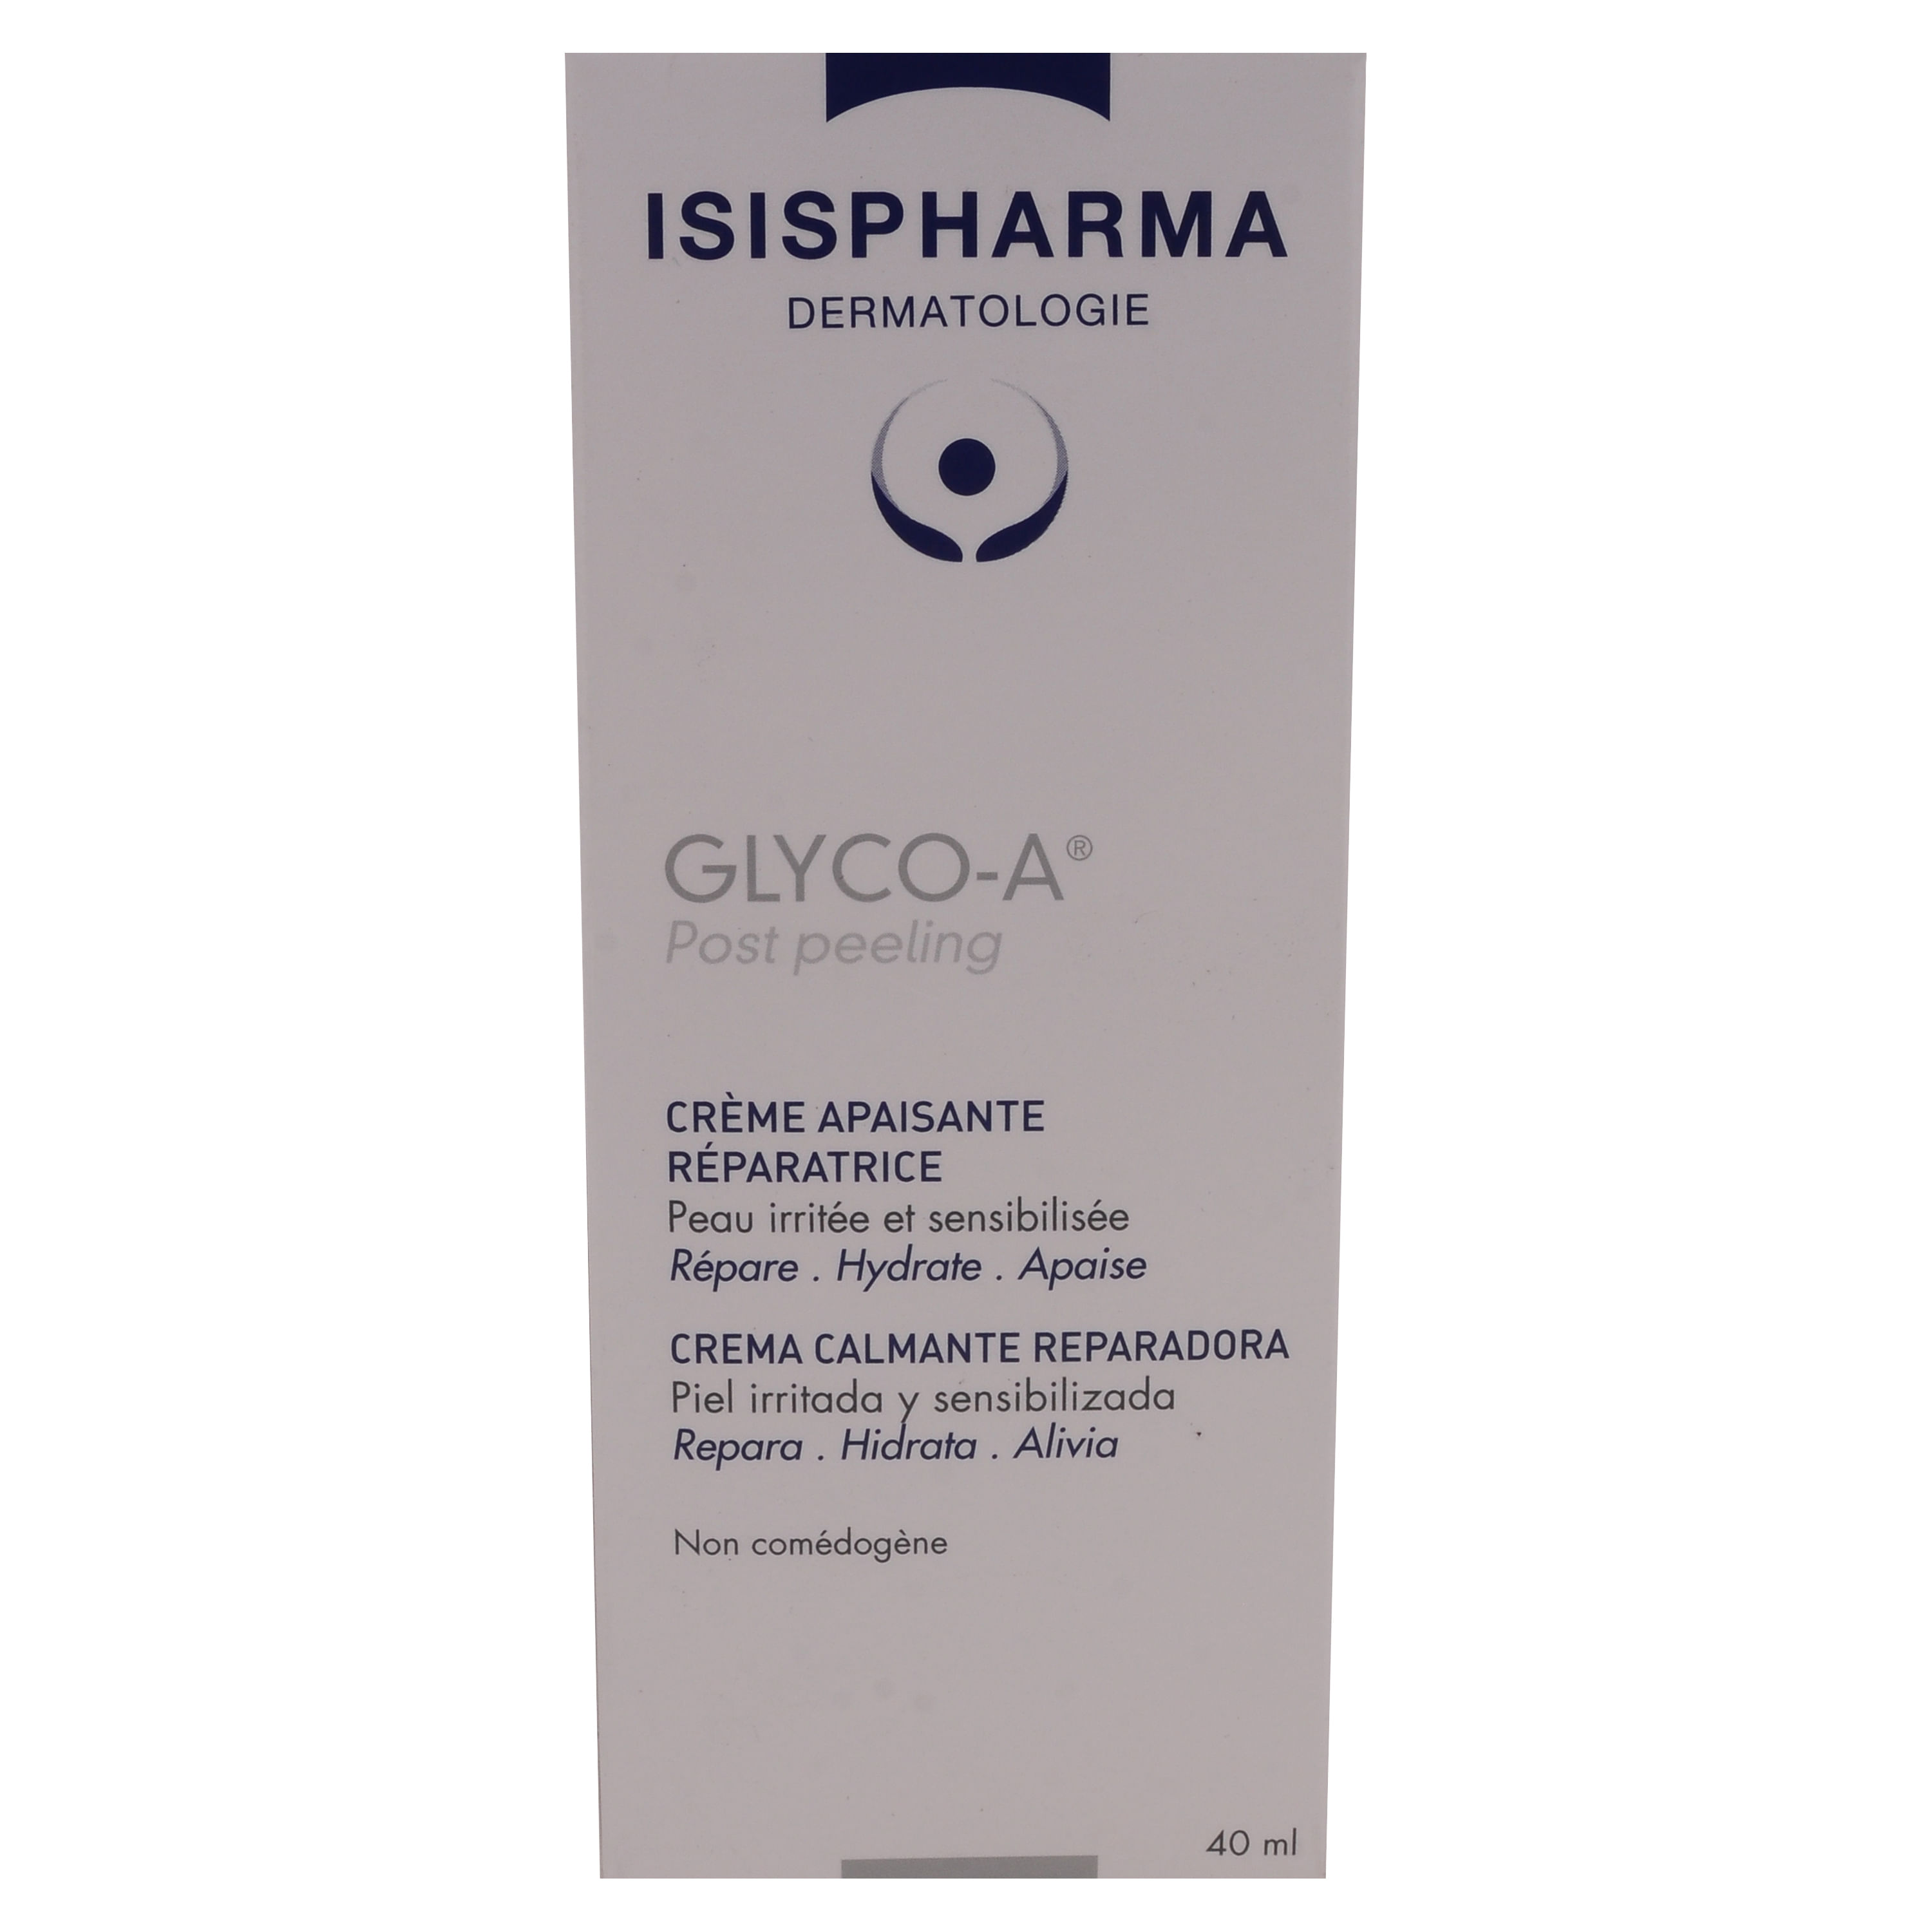 Glyco-A-Post-Peeling-Isispharma-40ml-1-57724